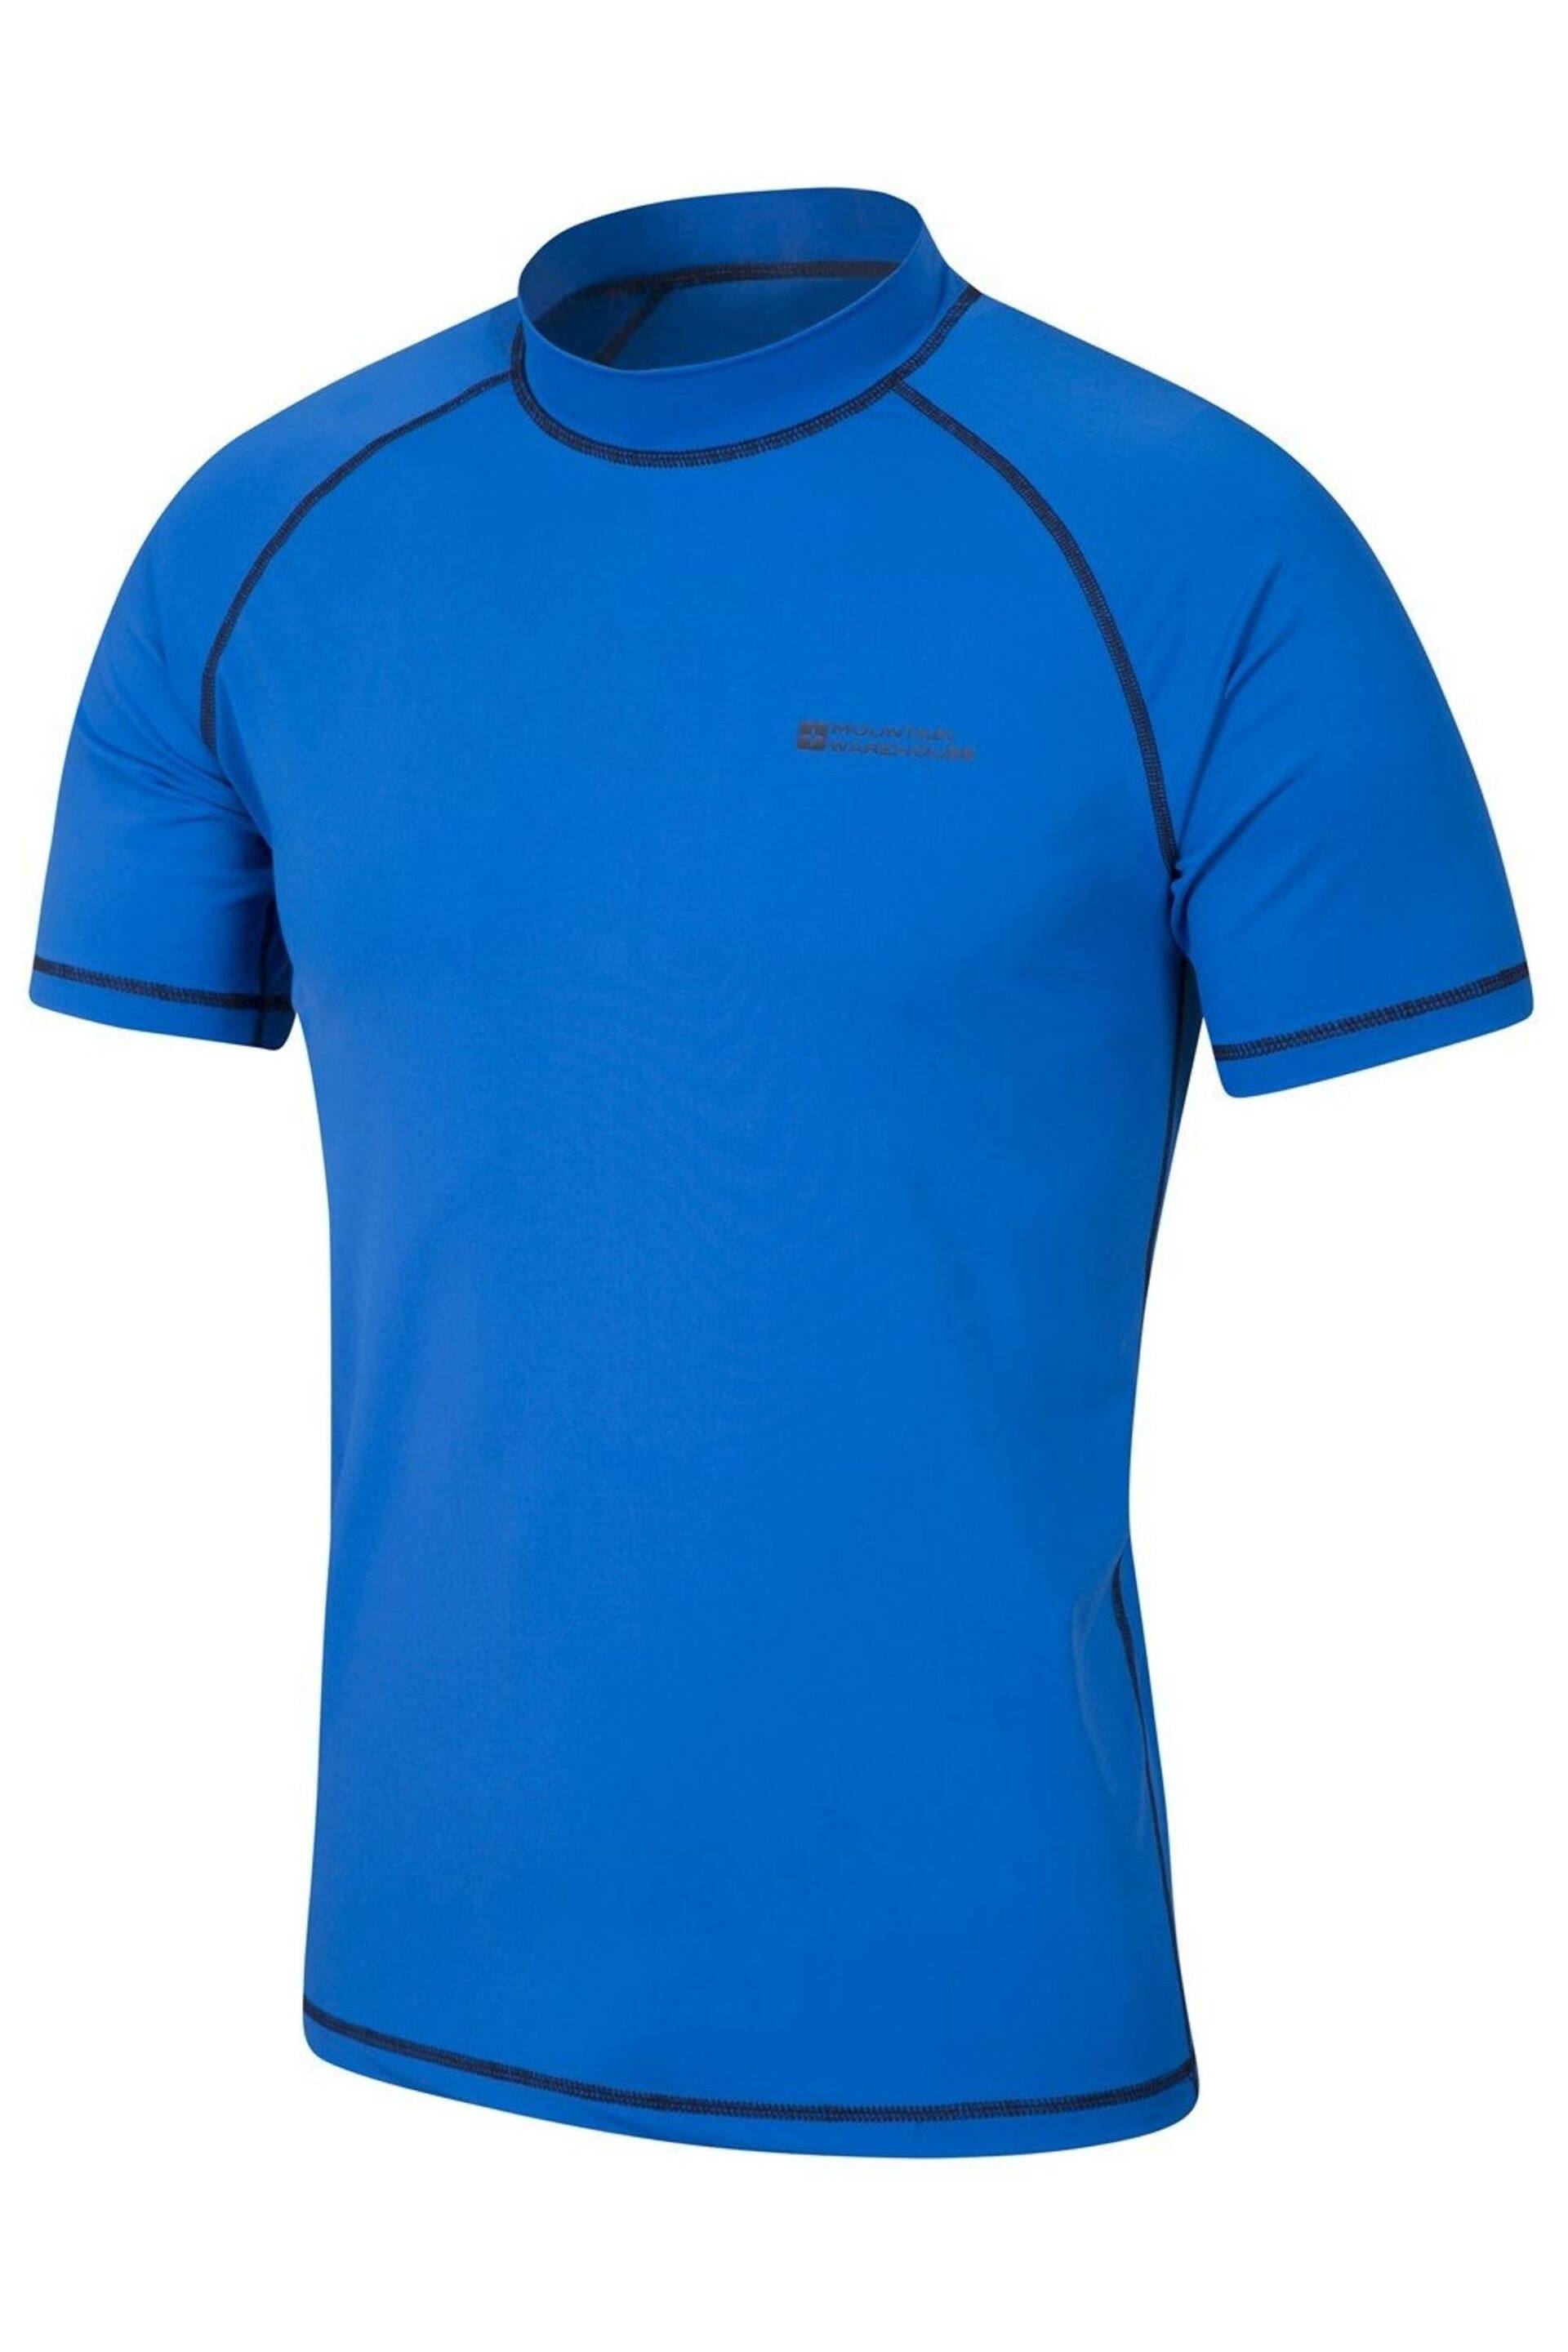 Mountain Warehouse Blue Mens UV Rash Vest - Image 3 of 4